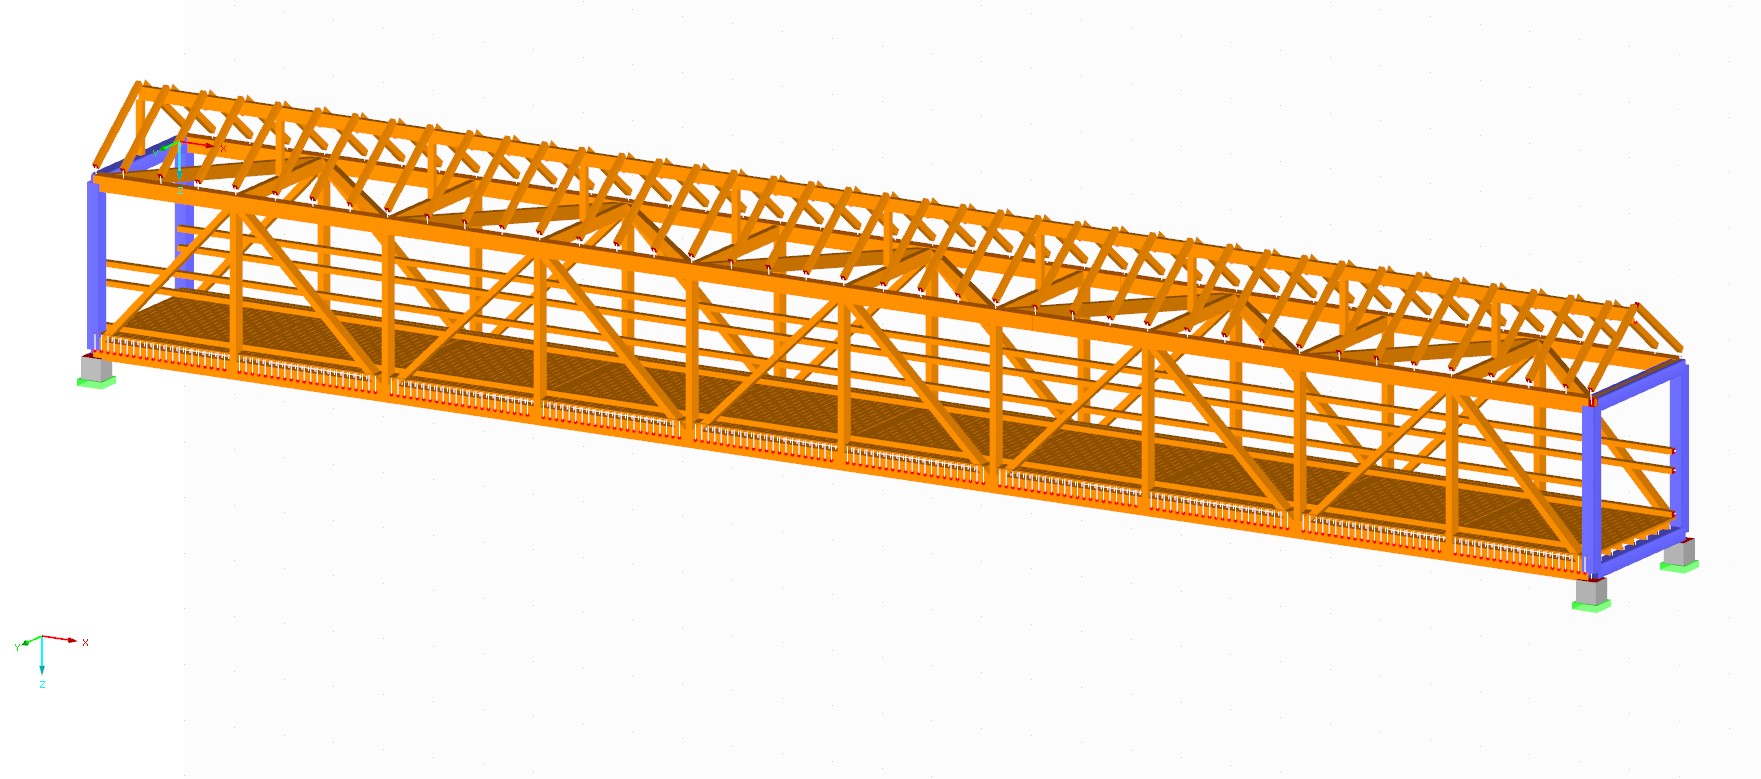 Development of EDP Program for Damage Analysis of Timber Bridges Based on Vibration Measurements